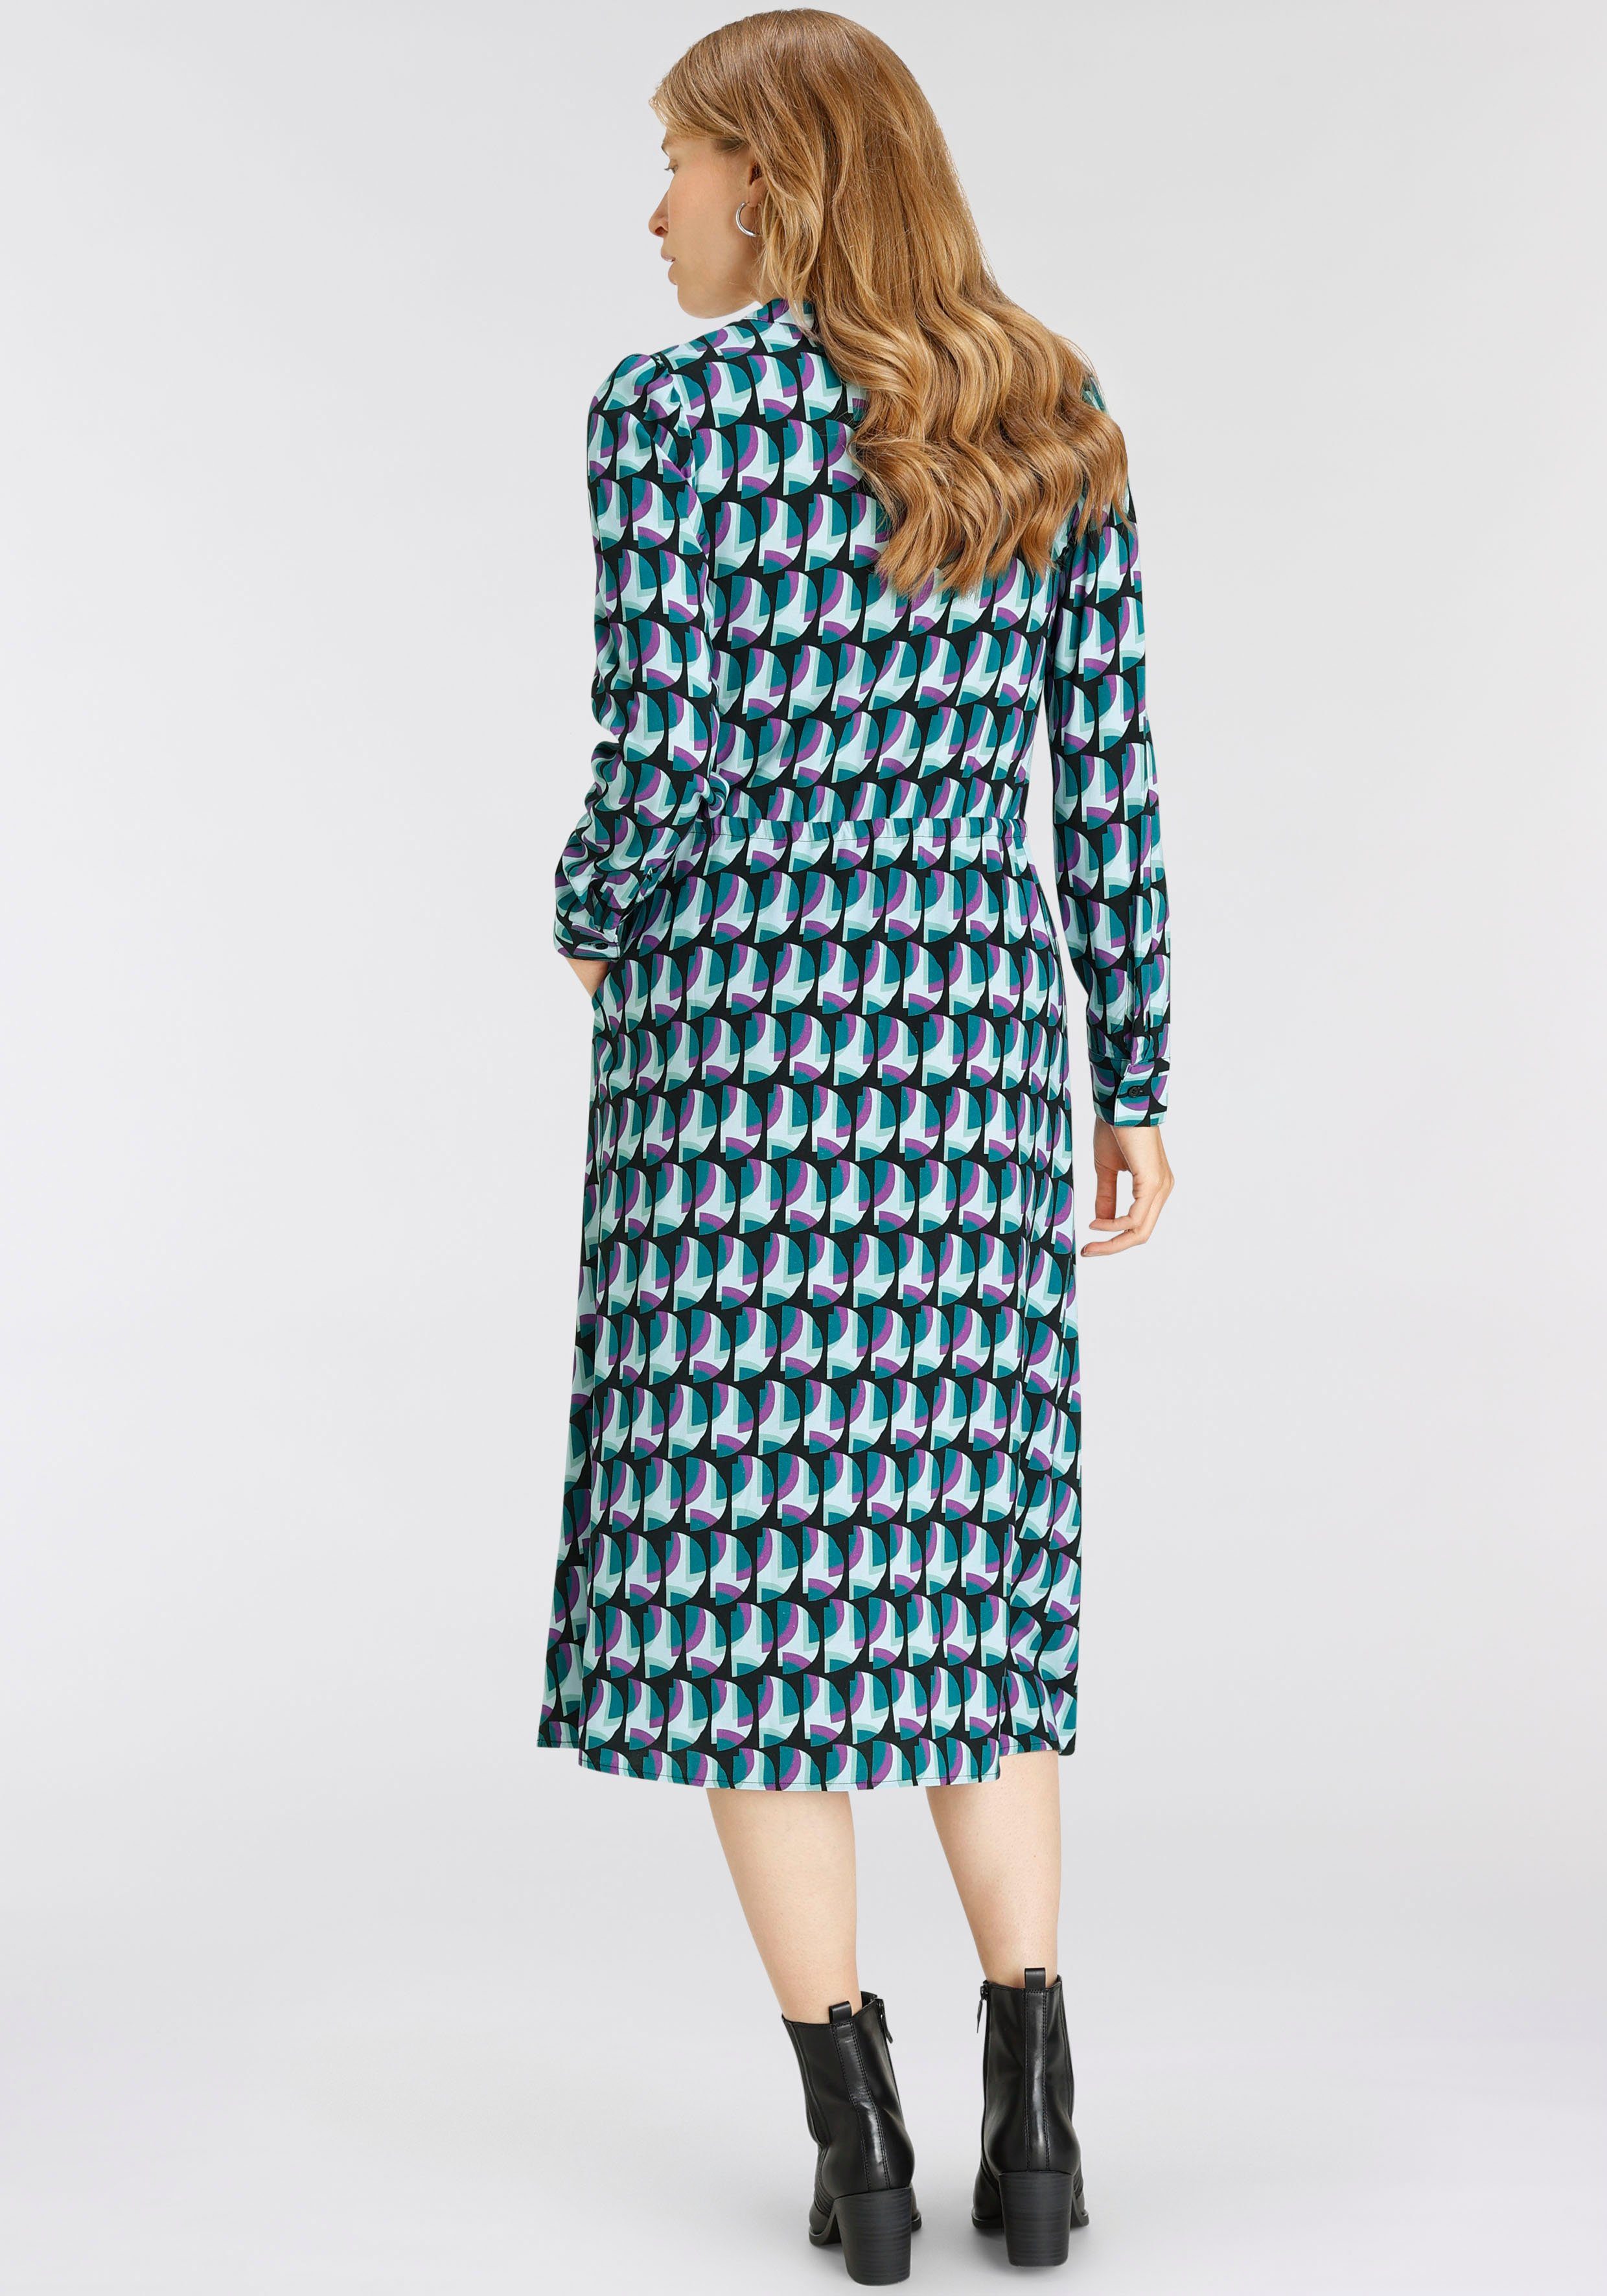 HECHTER PARIS Hemdblusenkleid elegantem Allover-Print mit